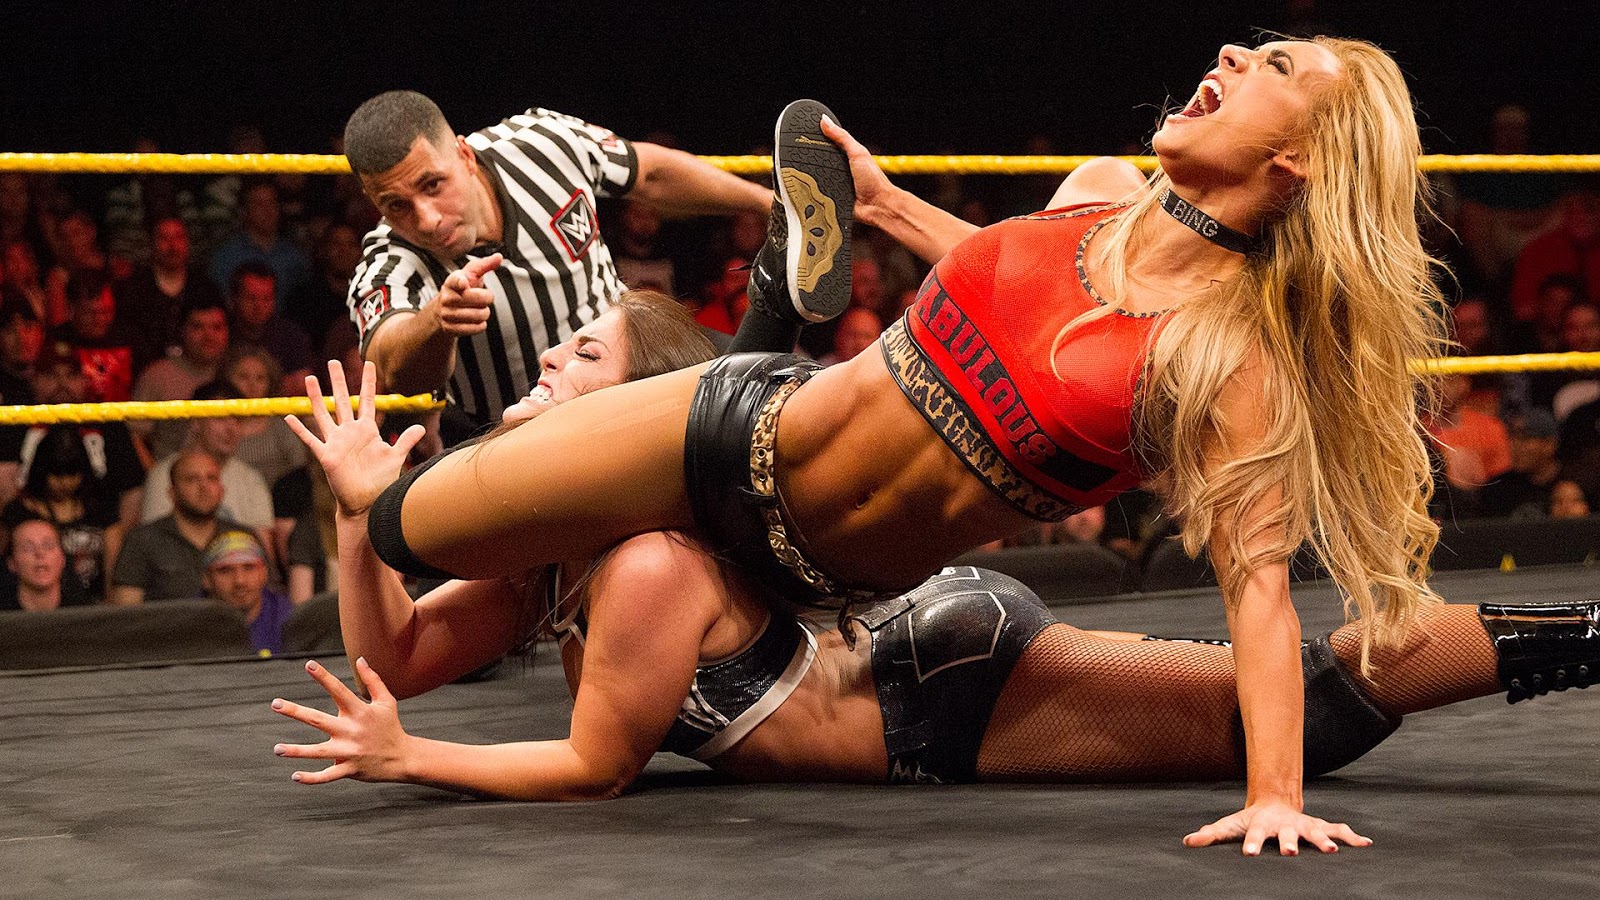 Women wrestling destroyed